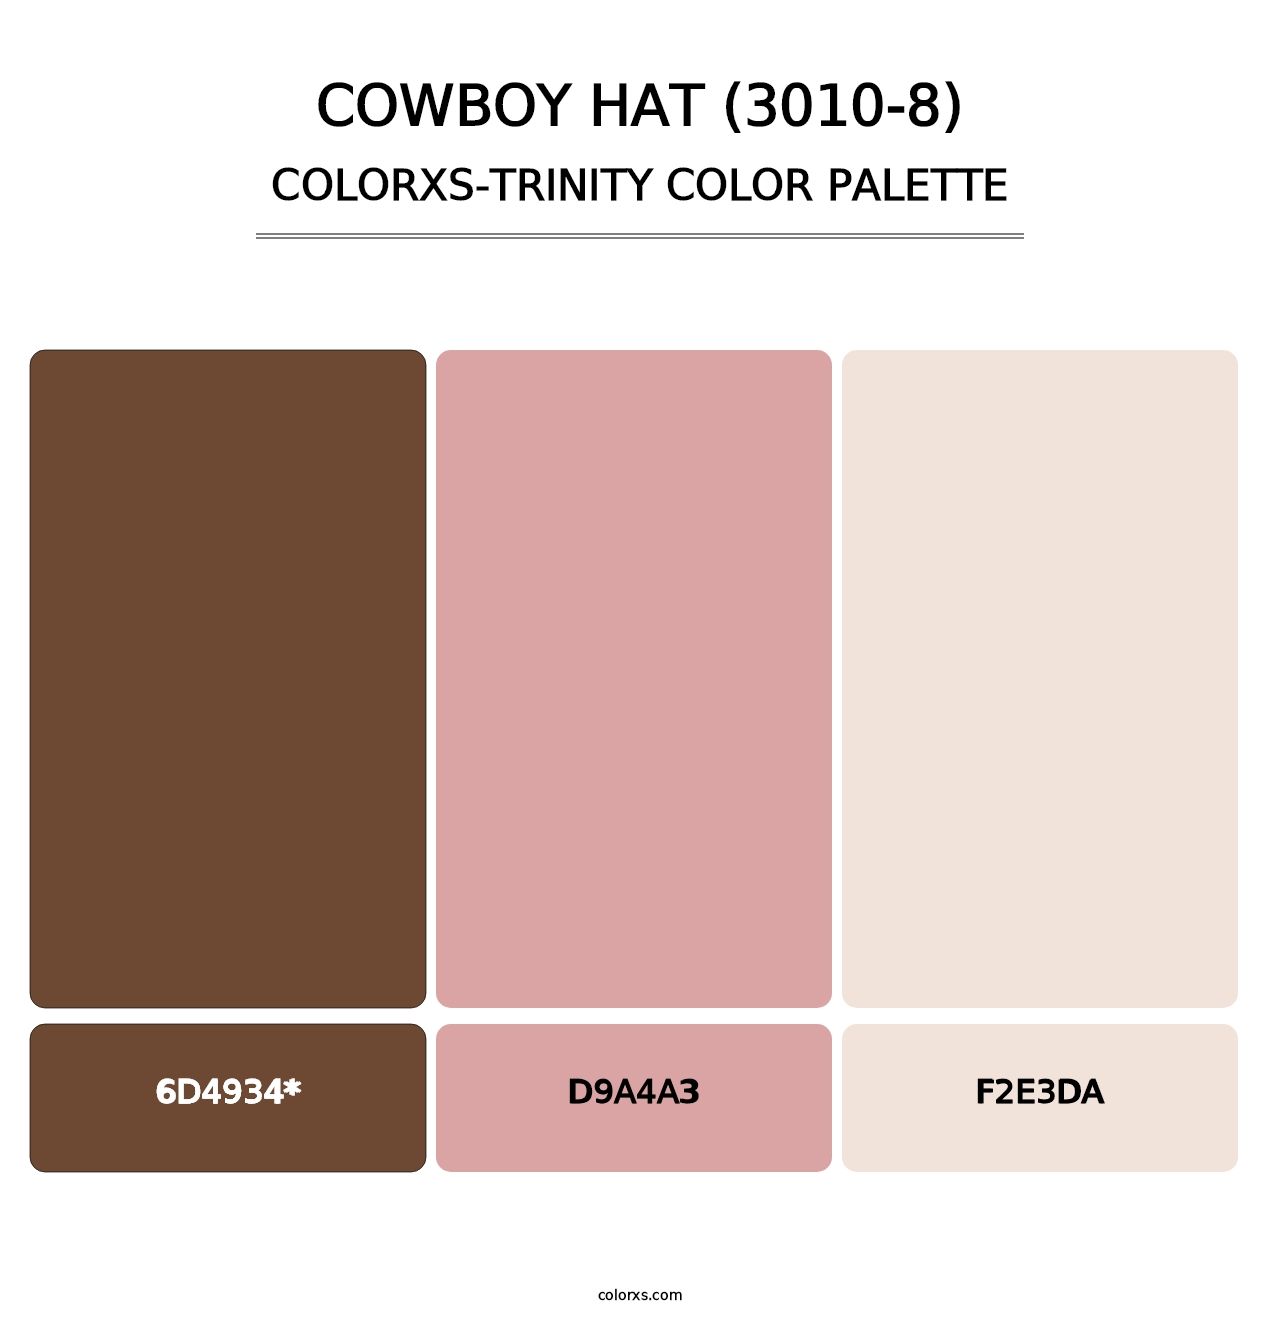 Cowboy Hat (3010-8) - Colorxs Trinity Palette